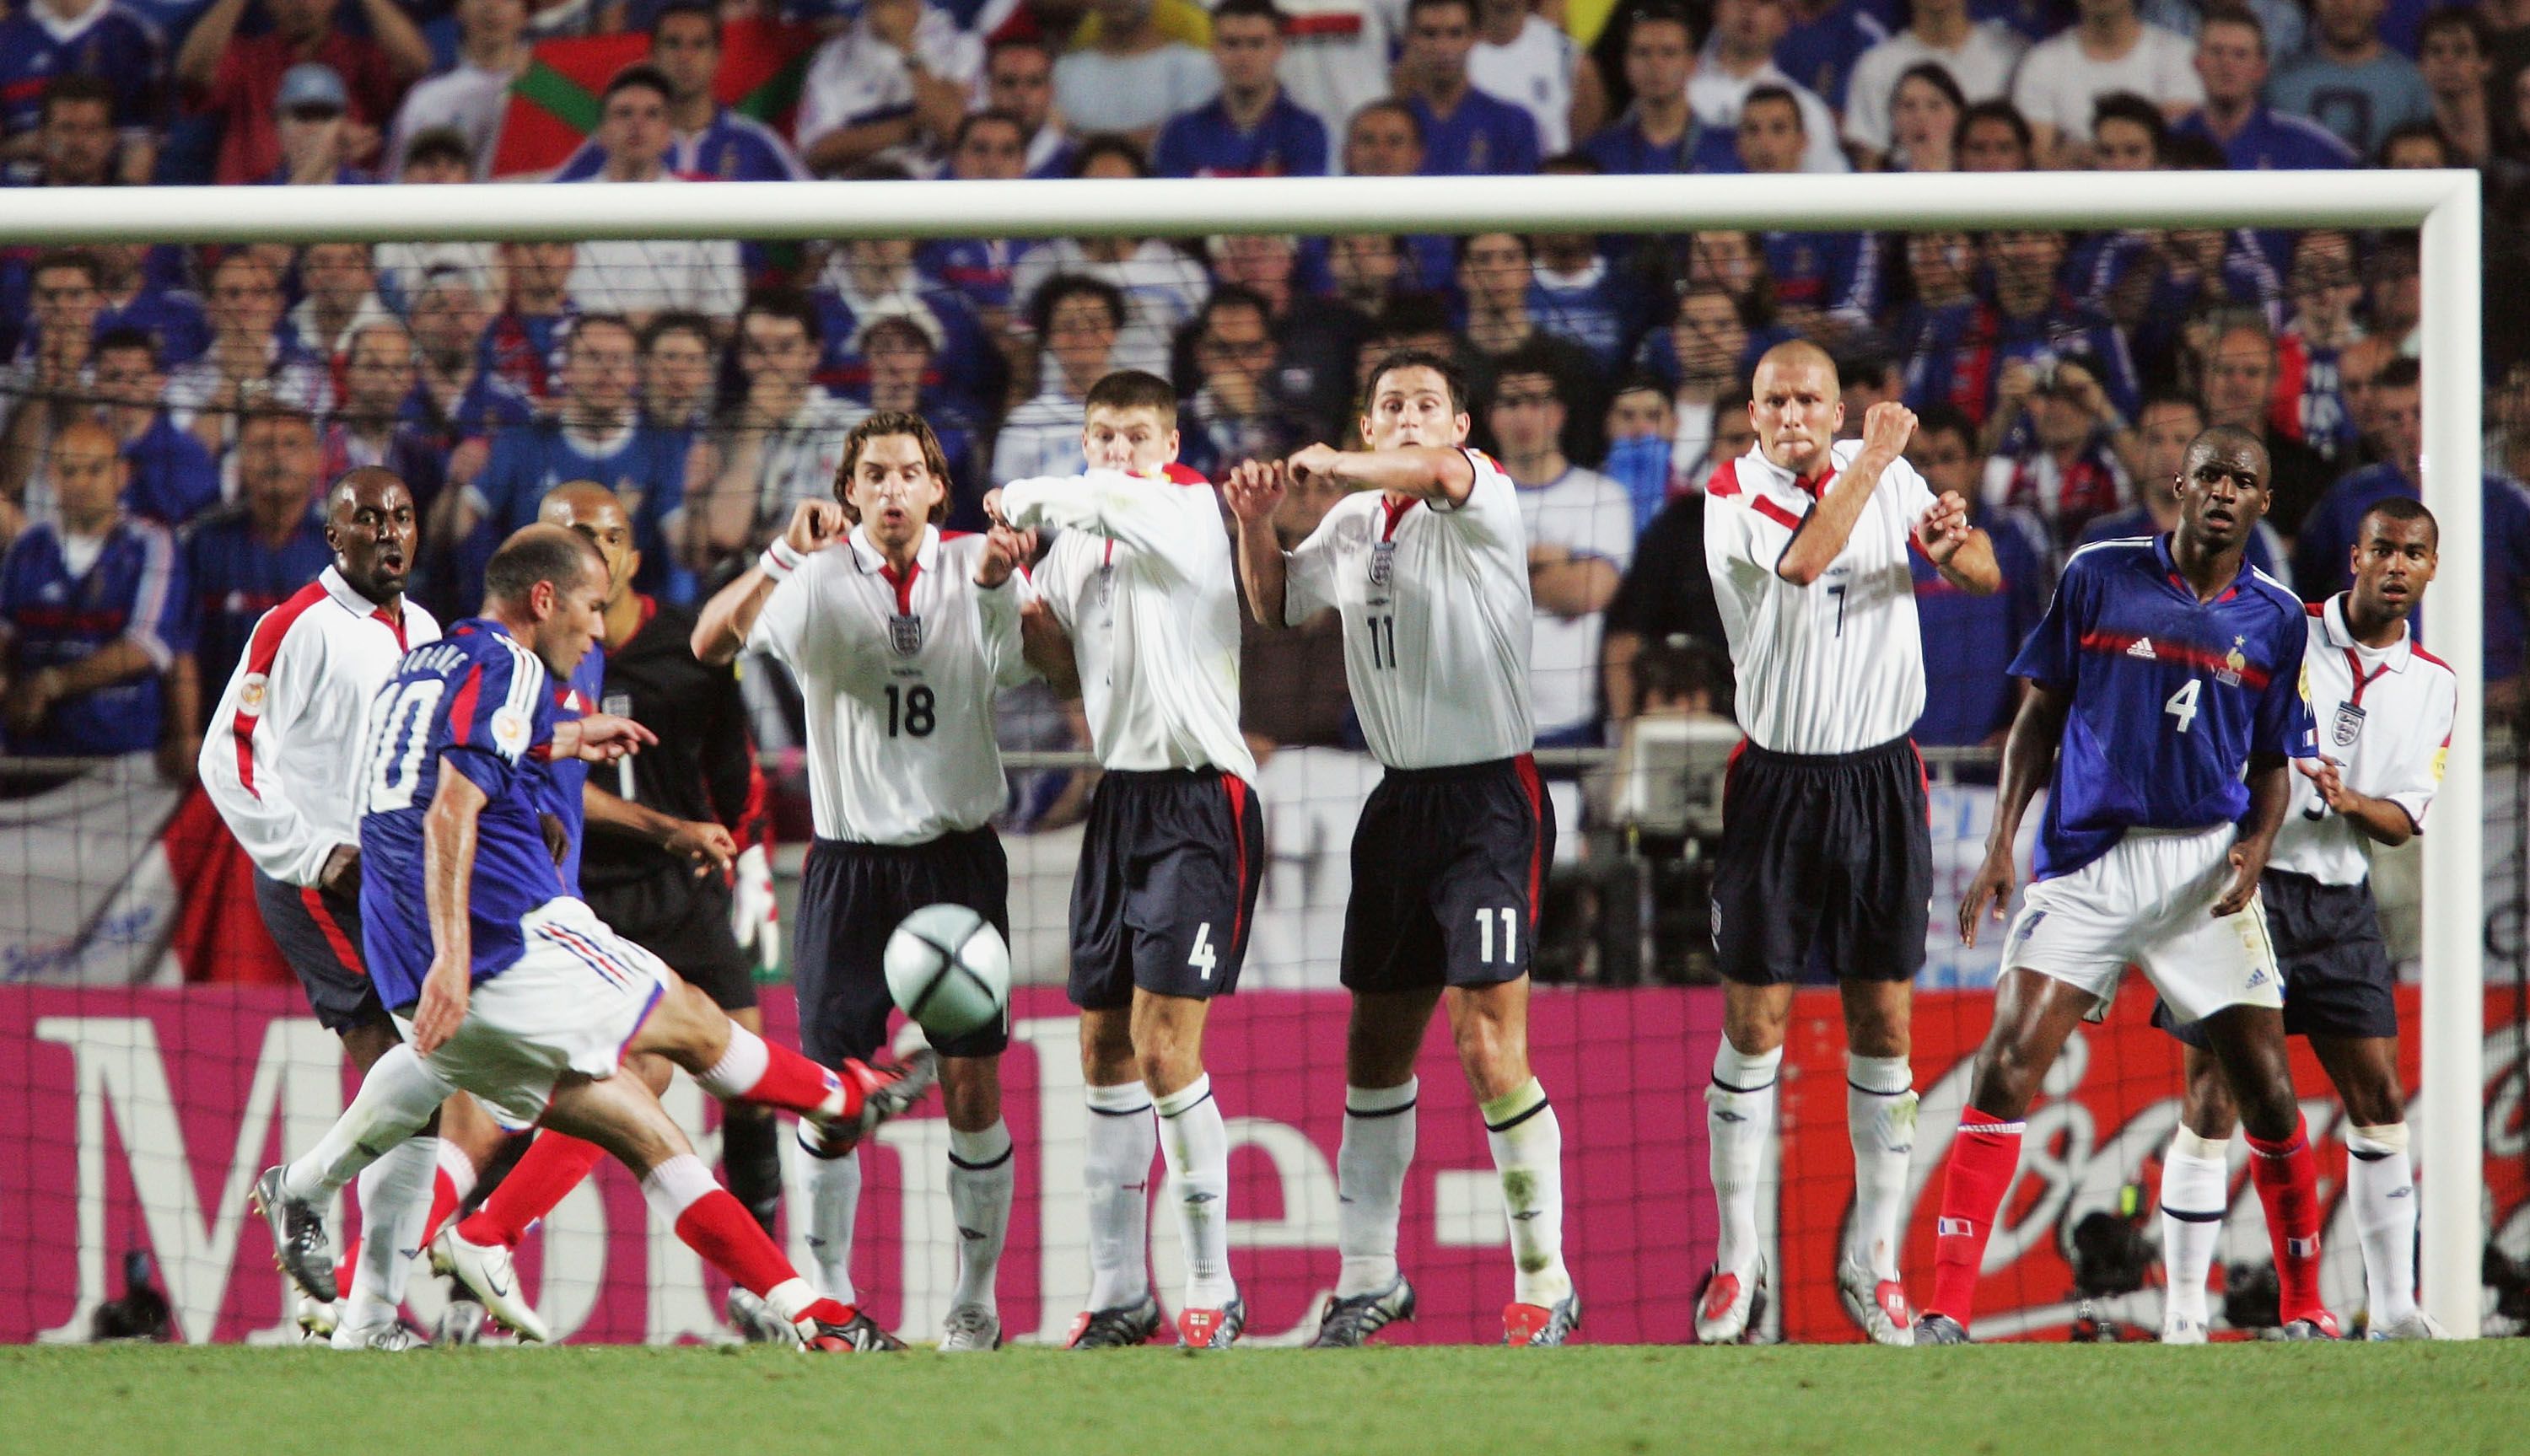 Zidane scores for France vs England at Euro 2004